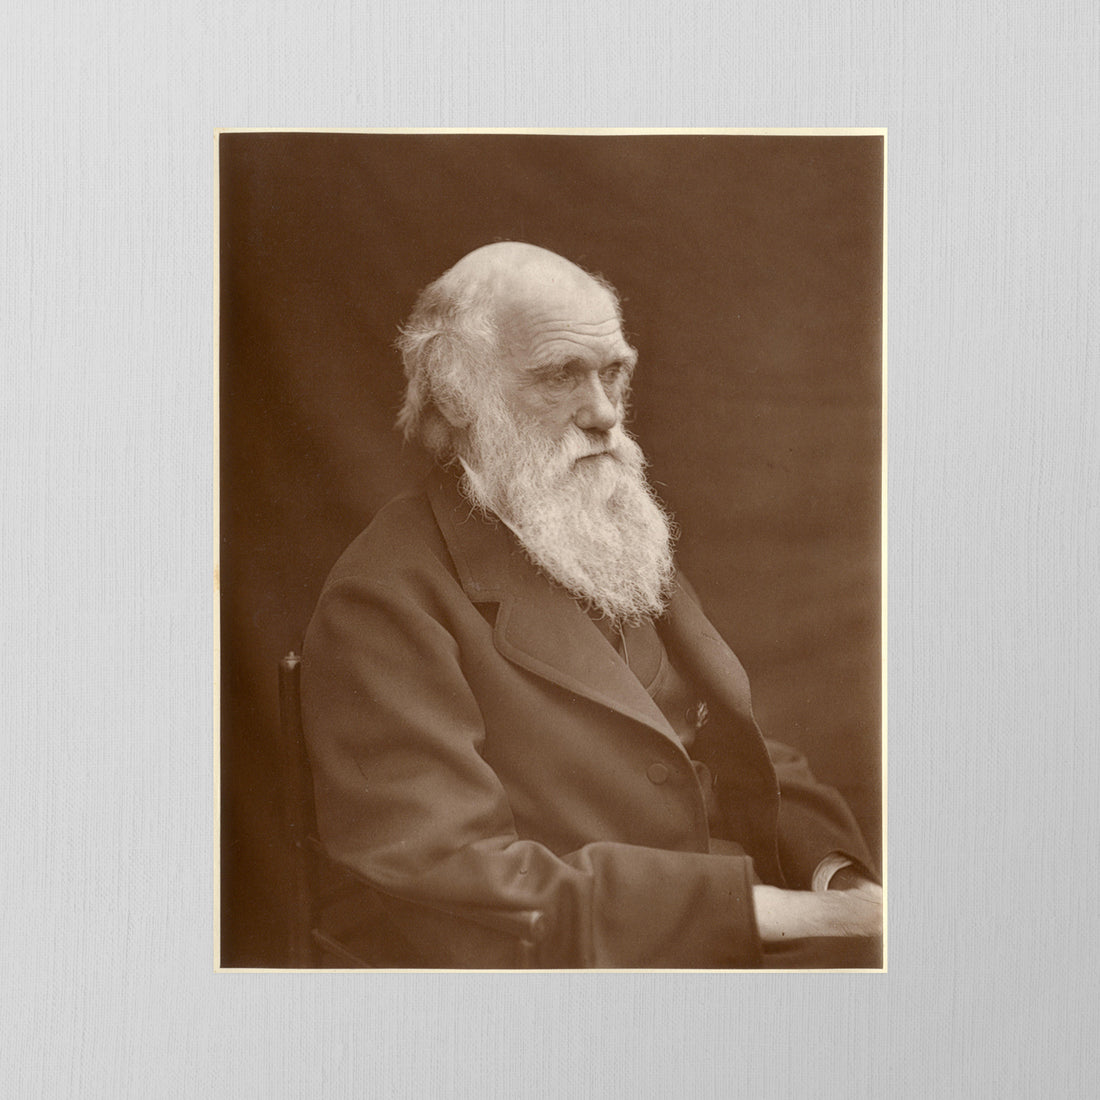 Charles Darwin by Jordan J. Lloyd, 1874